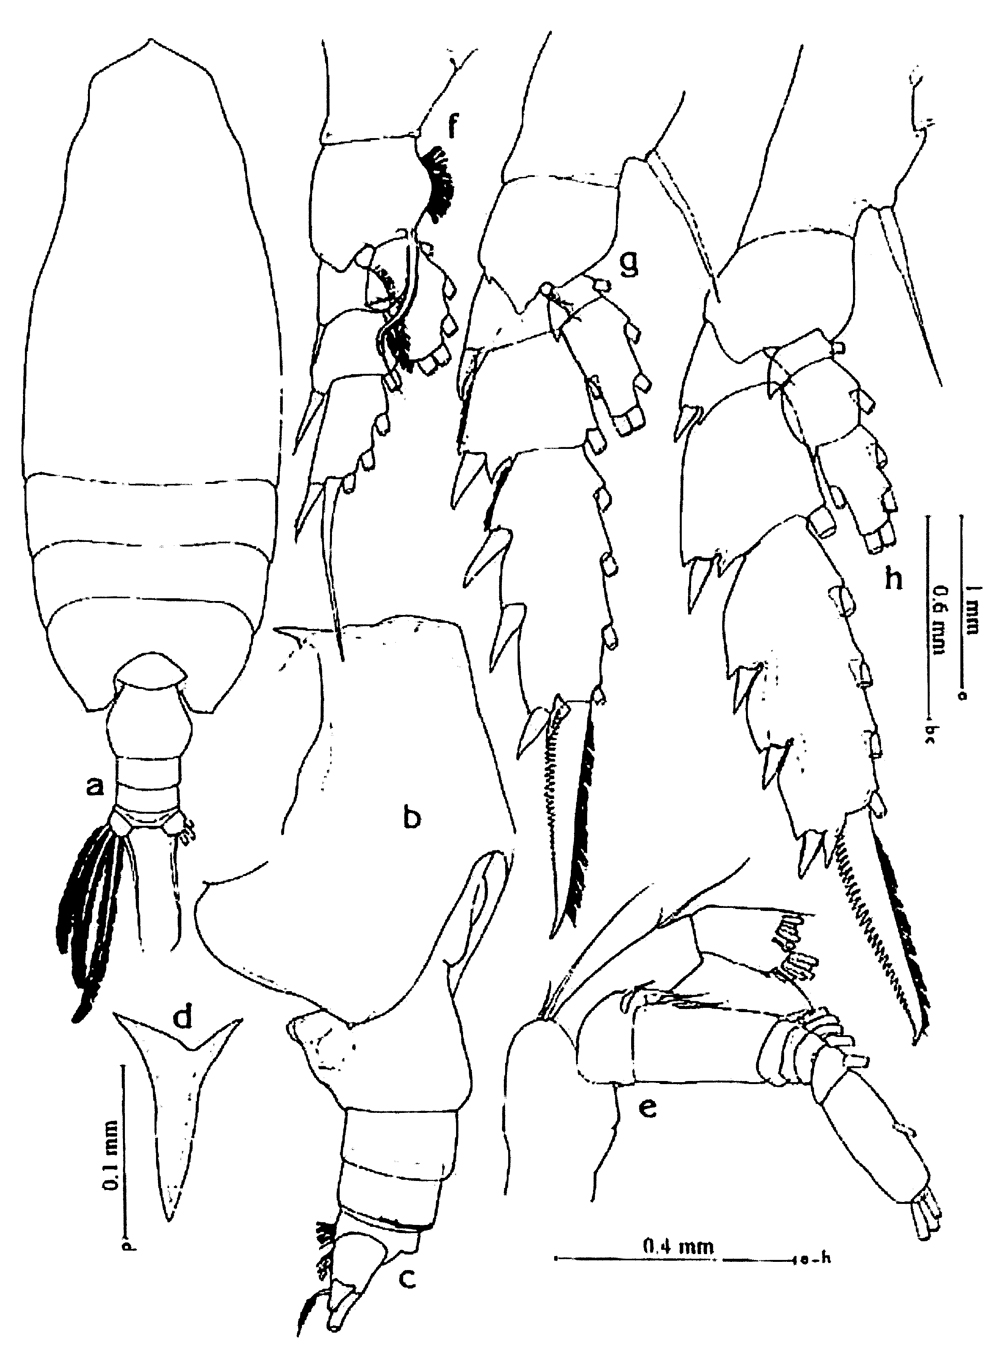 Species Chirundina streetsii - Plate 24 of morphological figures